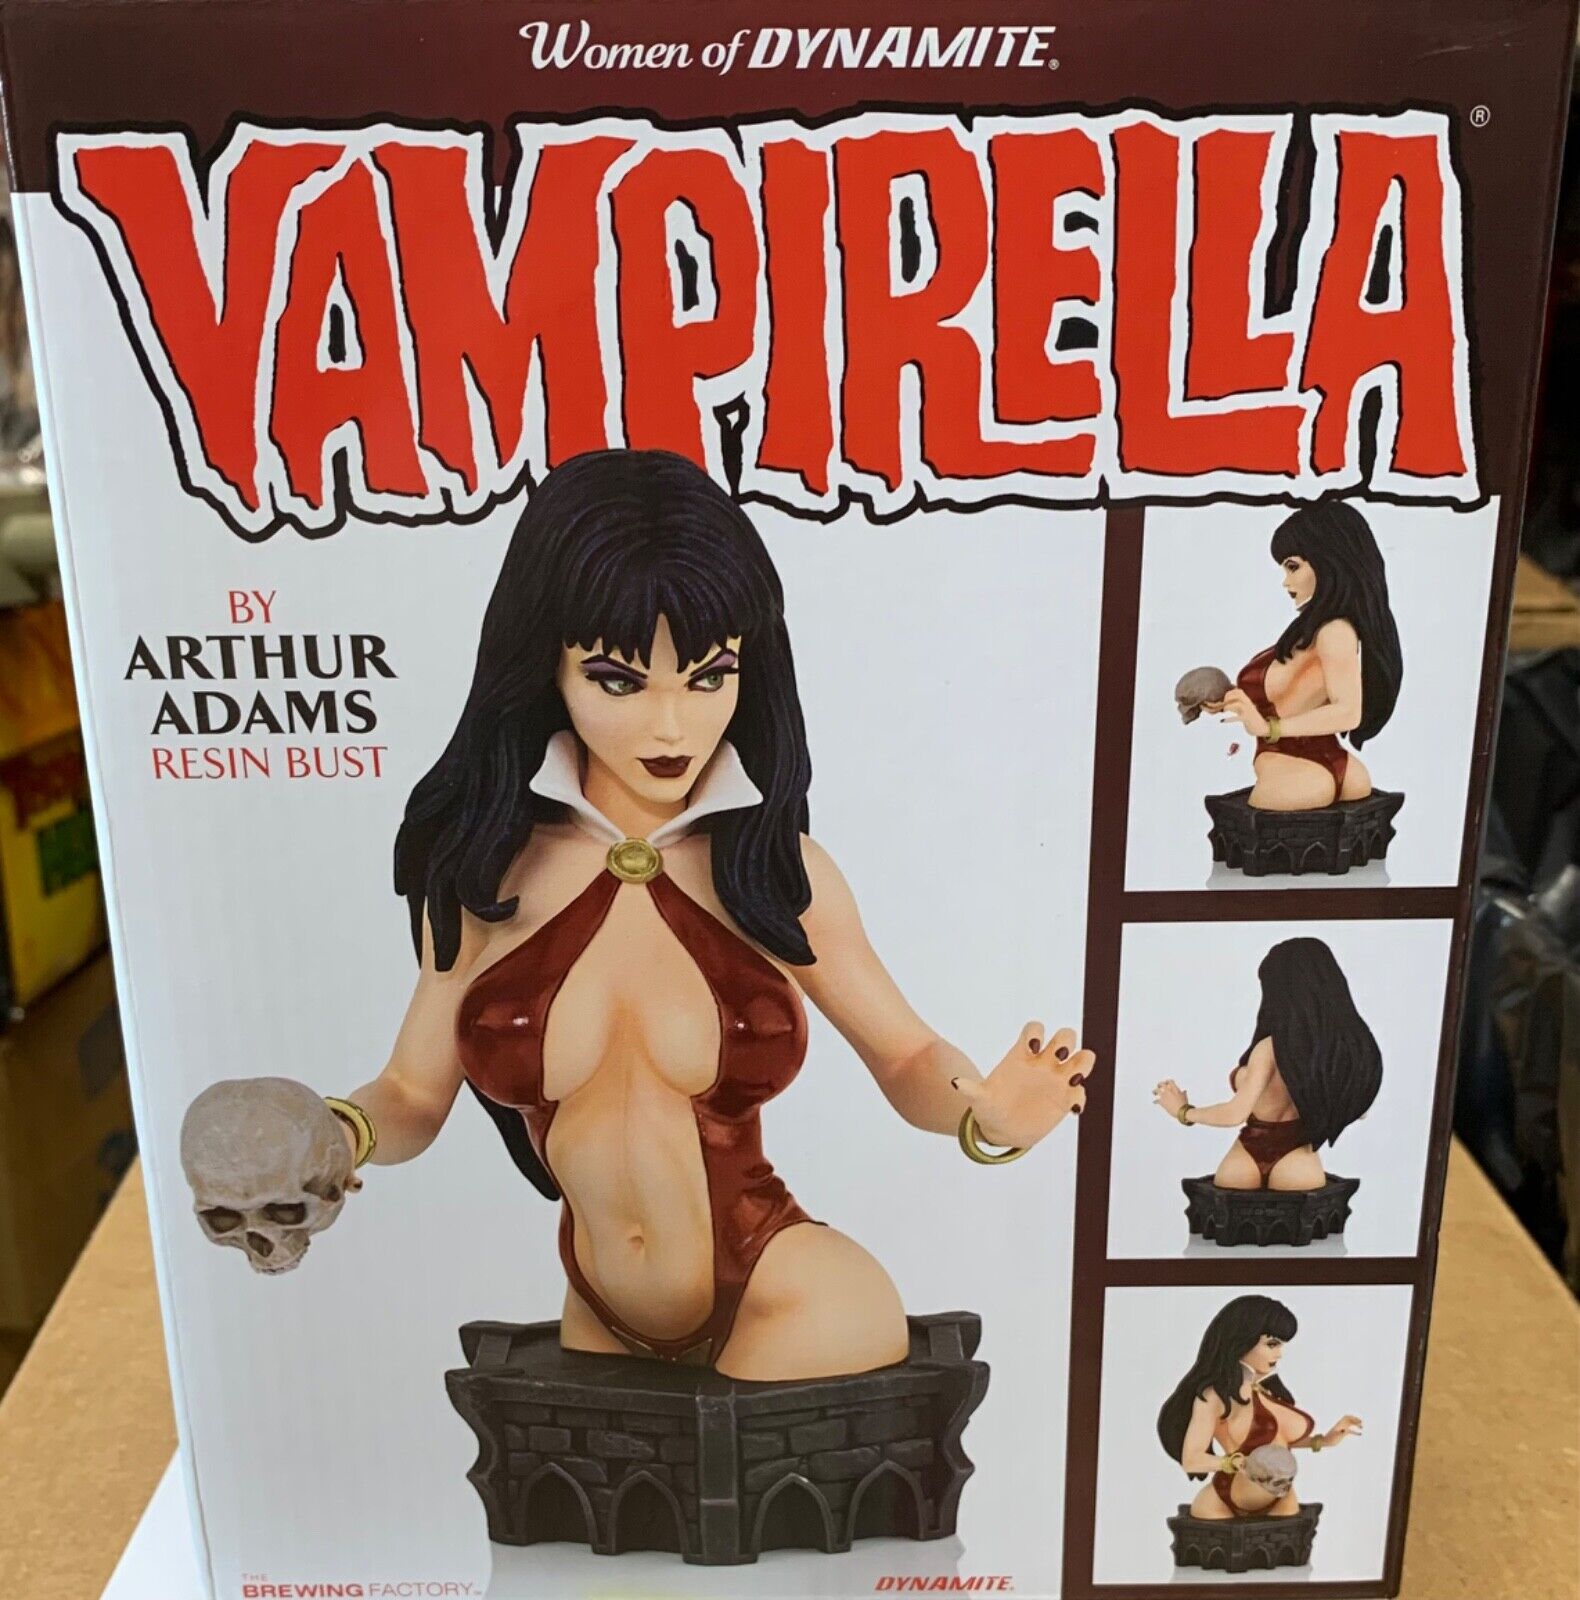 Women of Dynamite Vampirella By Arthur Adams Resin Bust by Jason Smith